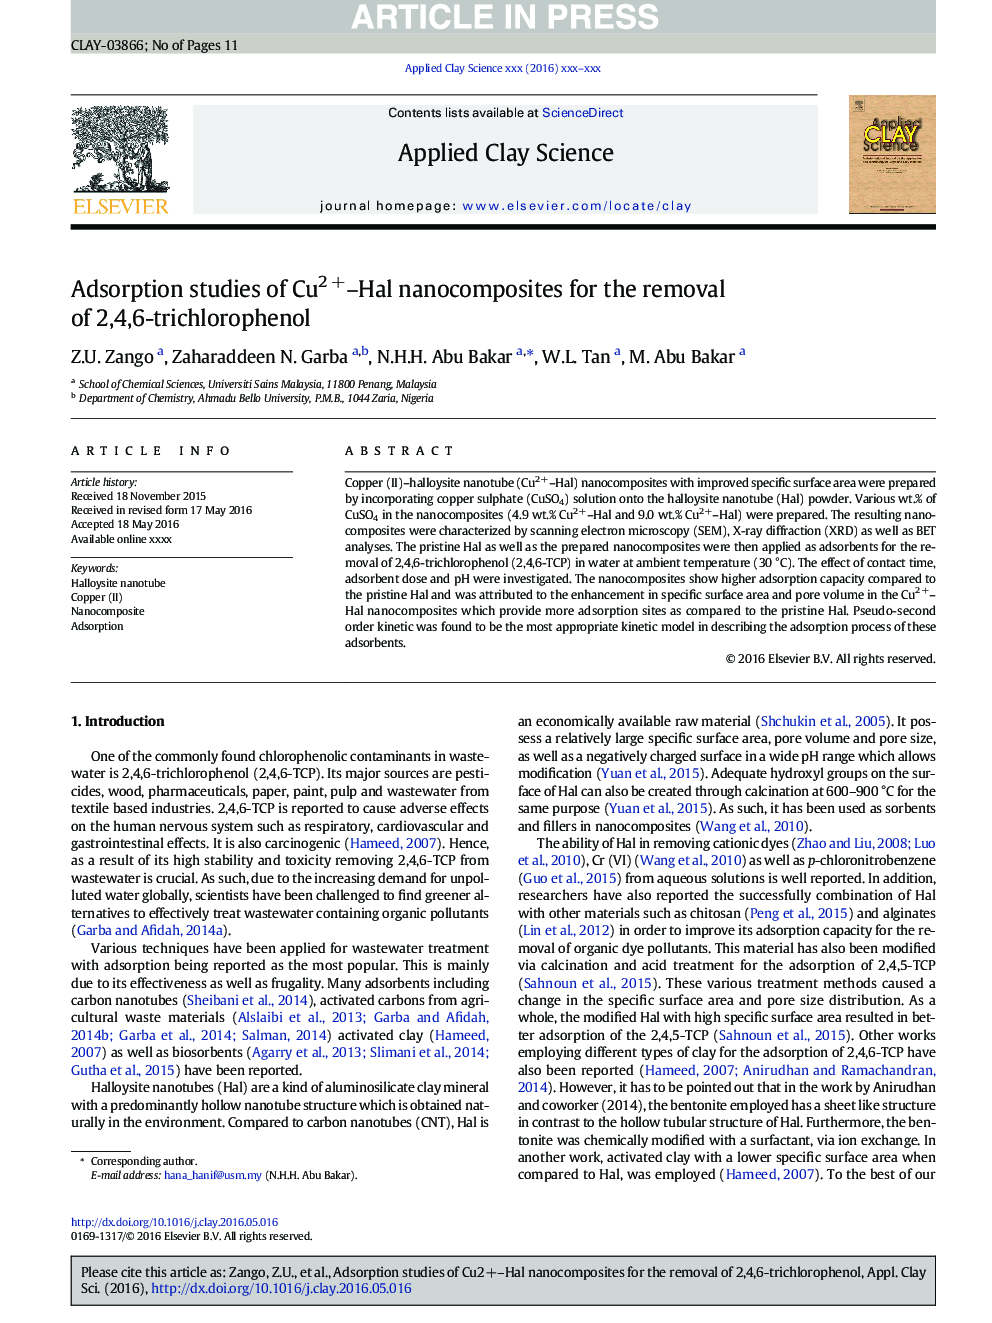 Adsorption studies of Cu2Â +-Hal nanocomposites for the removal of 2,4,6-trichlorophenol